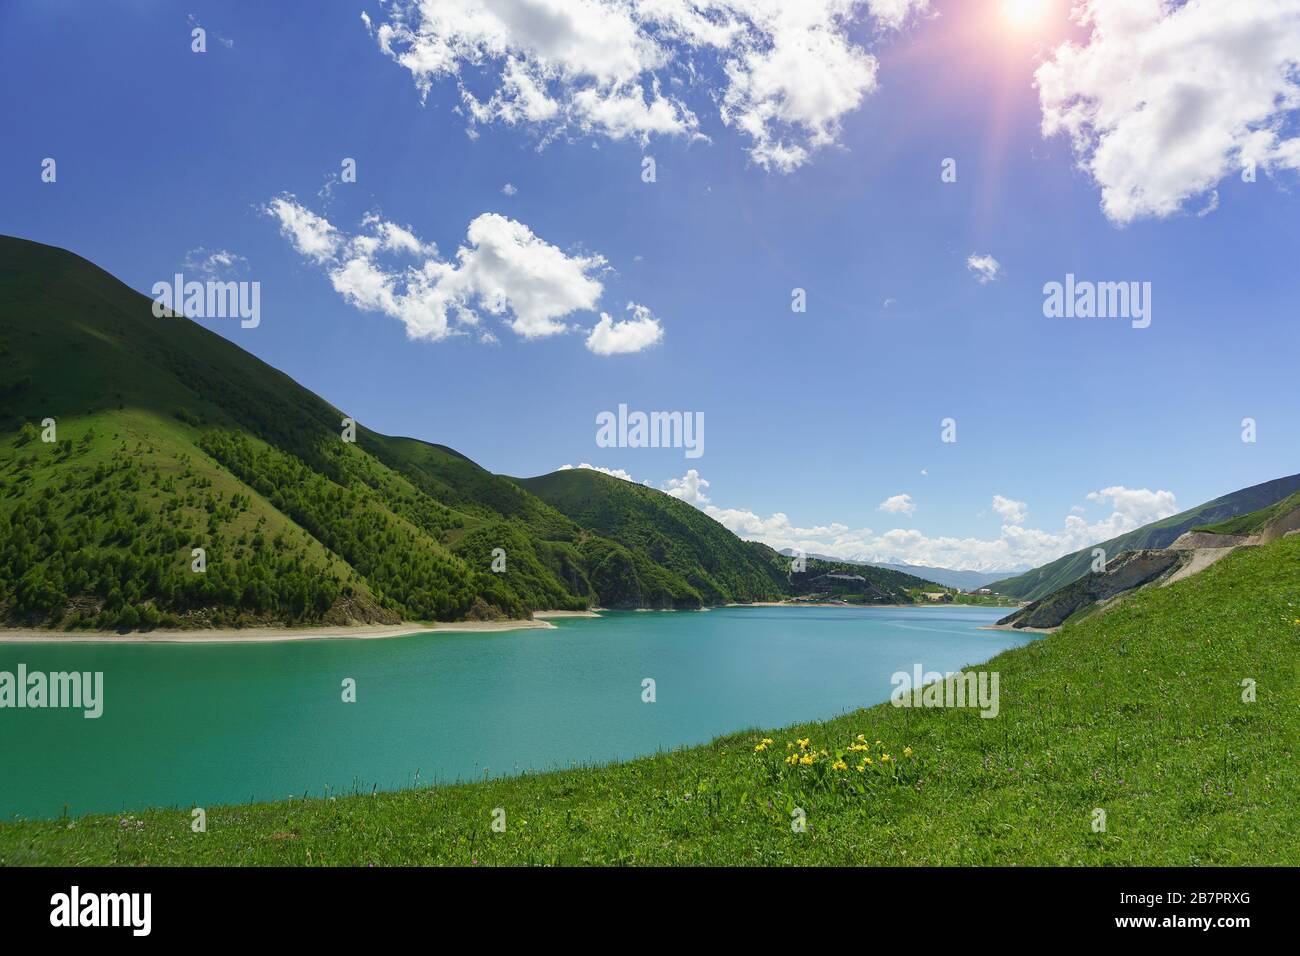 Bright Sunny day near the beautiful mountain lake Kezenoi am in Vedensky district, Chechen Republic. Juicy greens in early summer. Russia, North Cauca Stock Photo